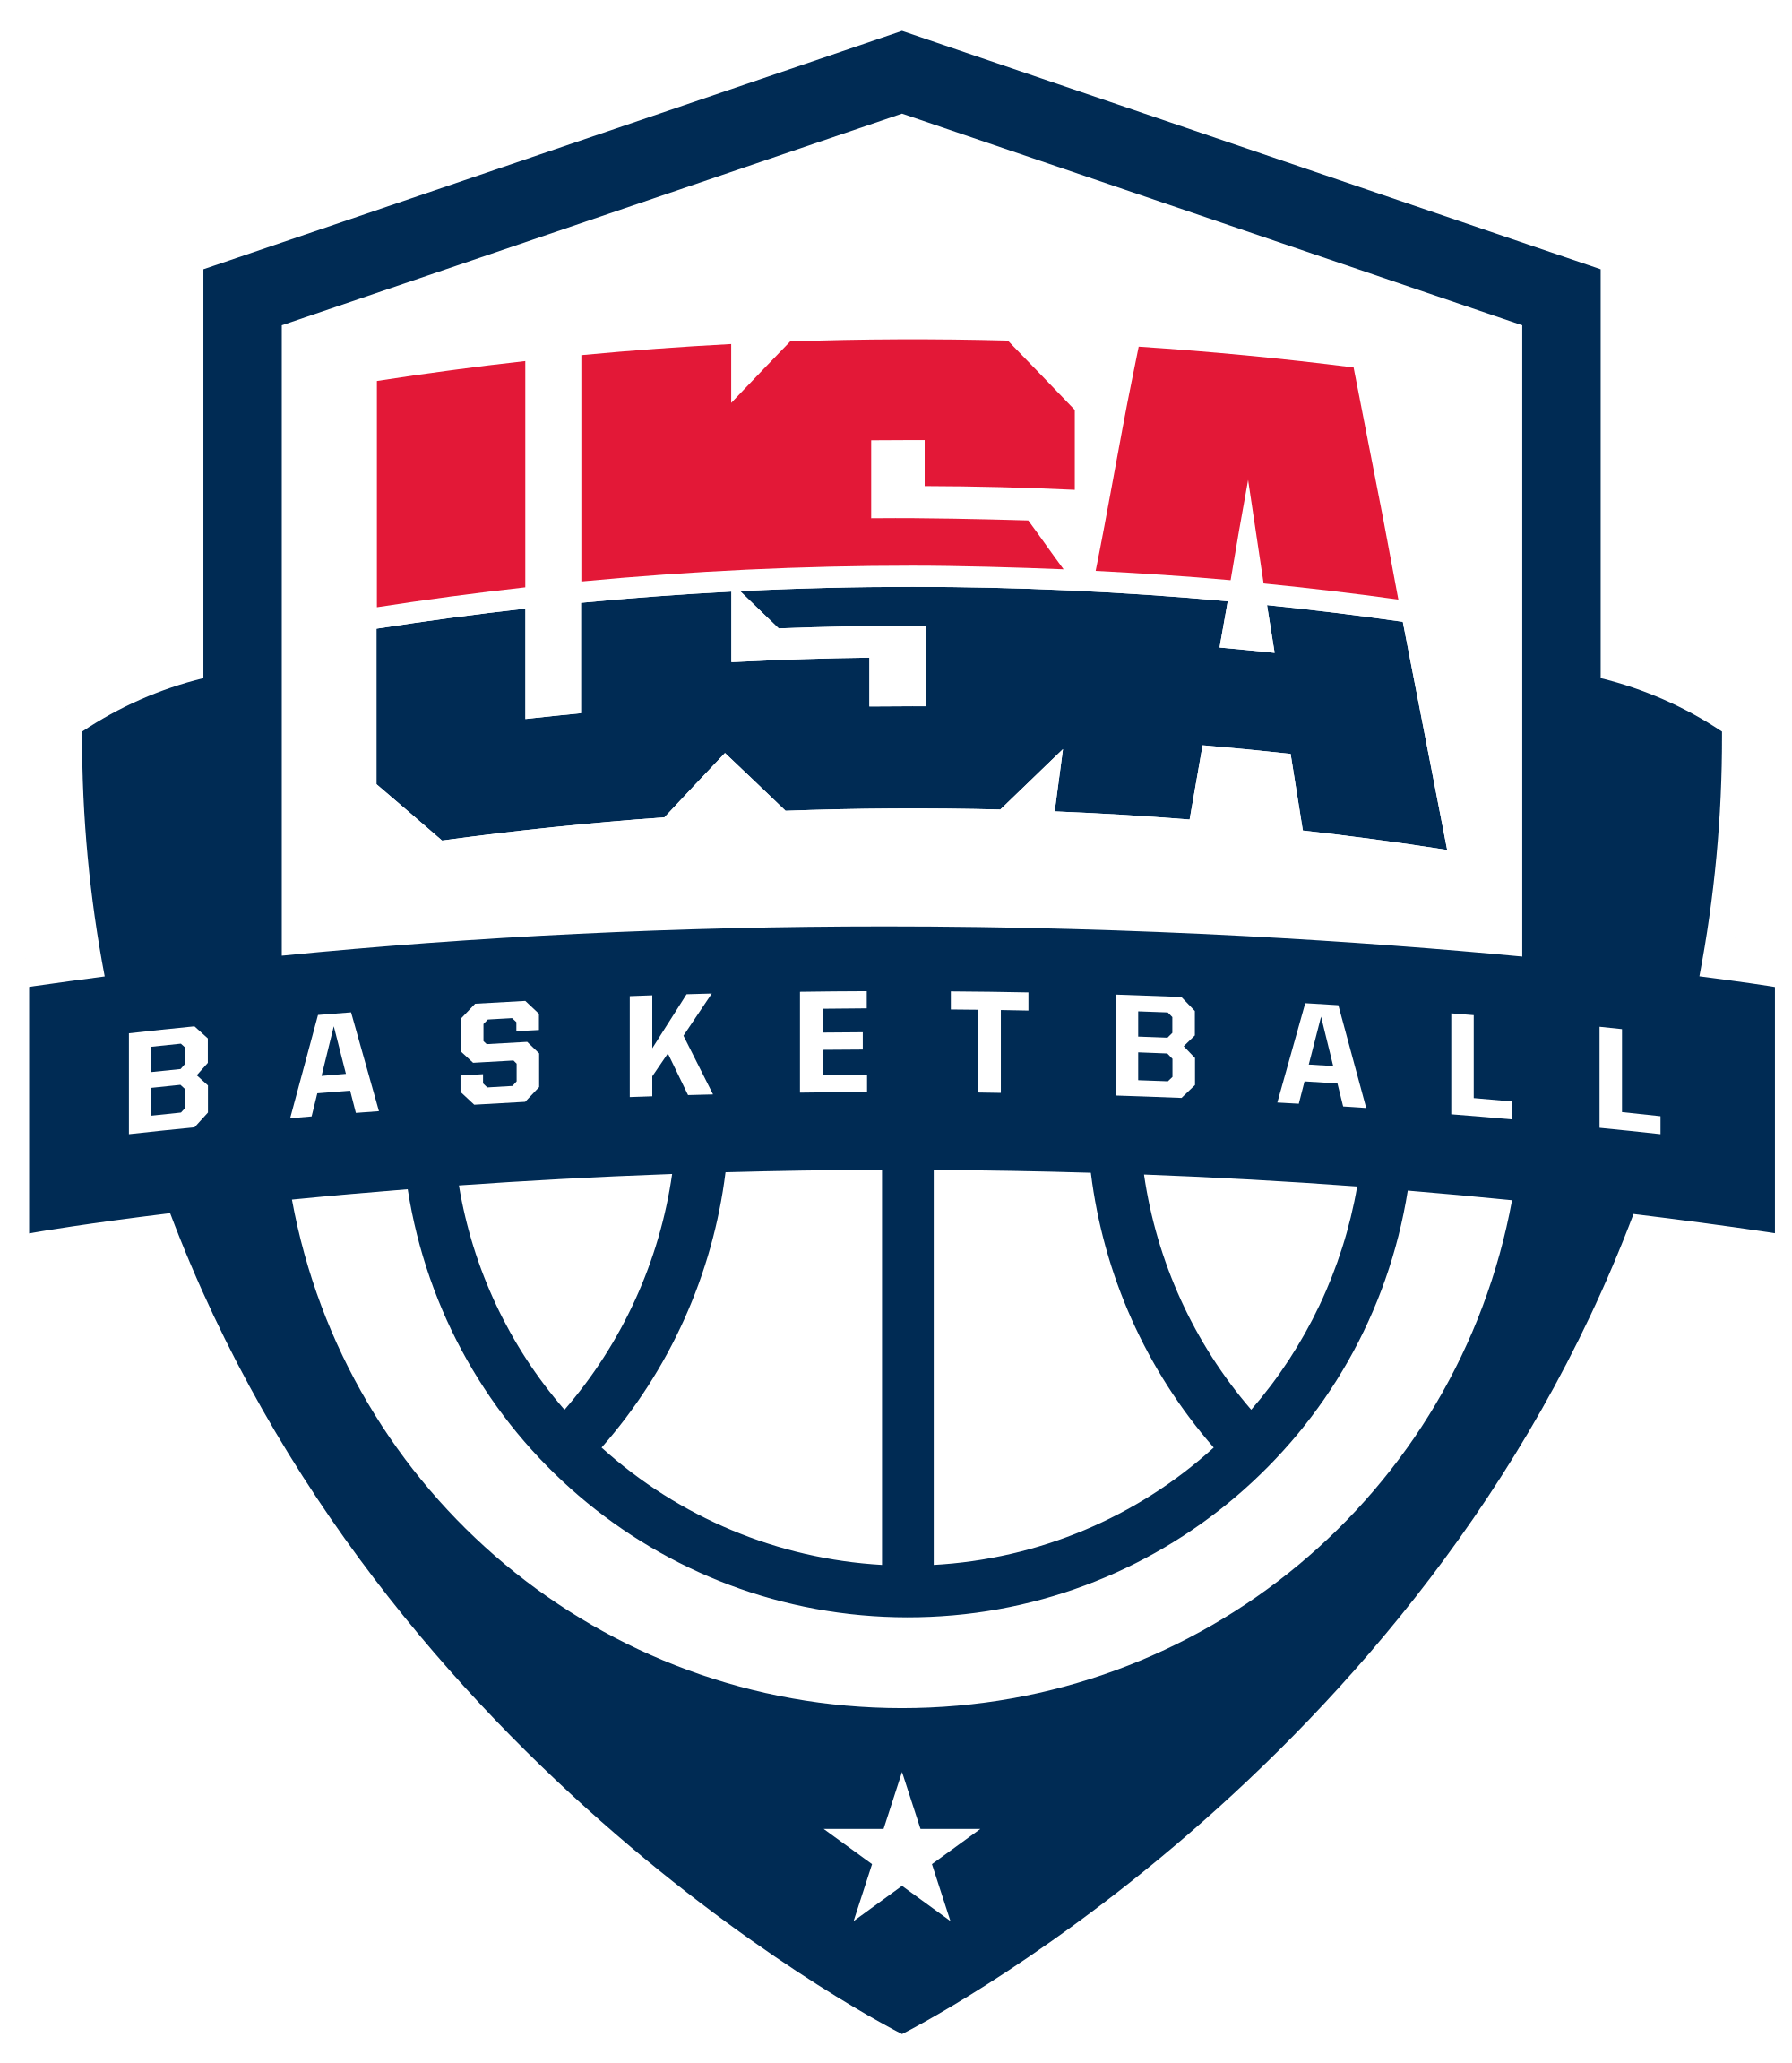 Red White Blue USA Basketball Logo - File:USA Basketball logo.svg - Wikimedia Commons